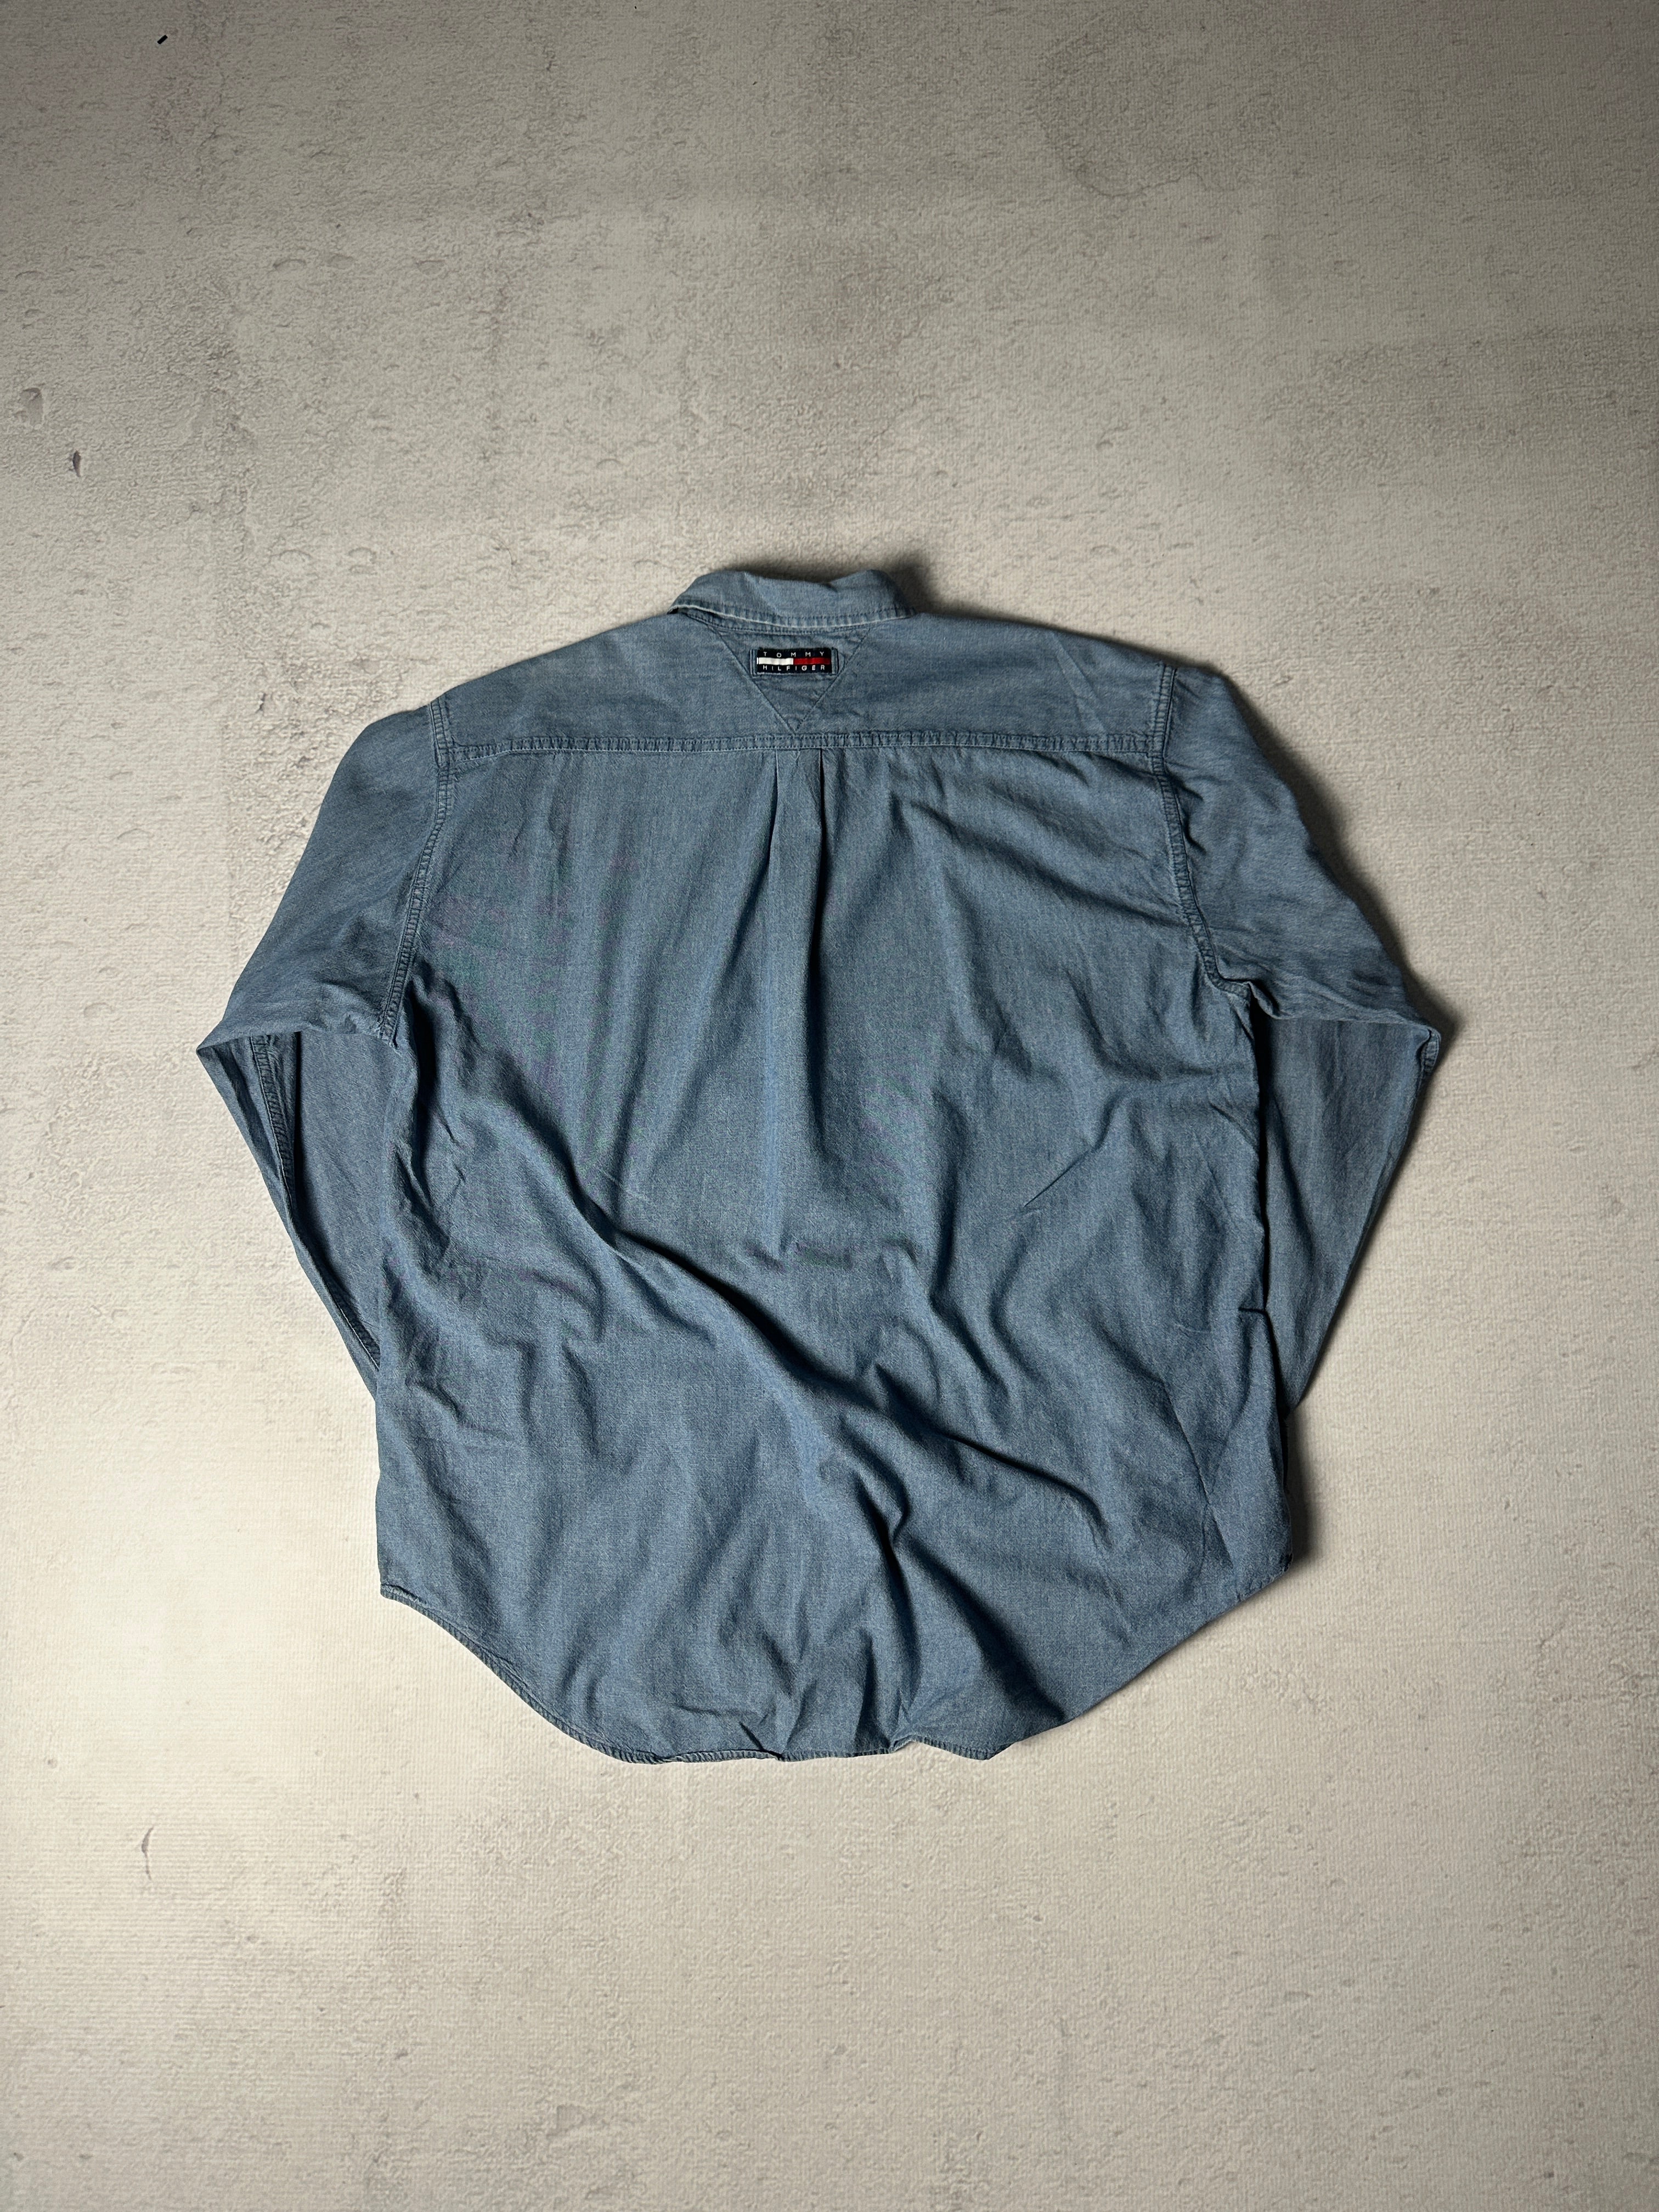 Vintage Tommy Hilfiger Denim Buttoned Shirt - Men's XL